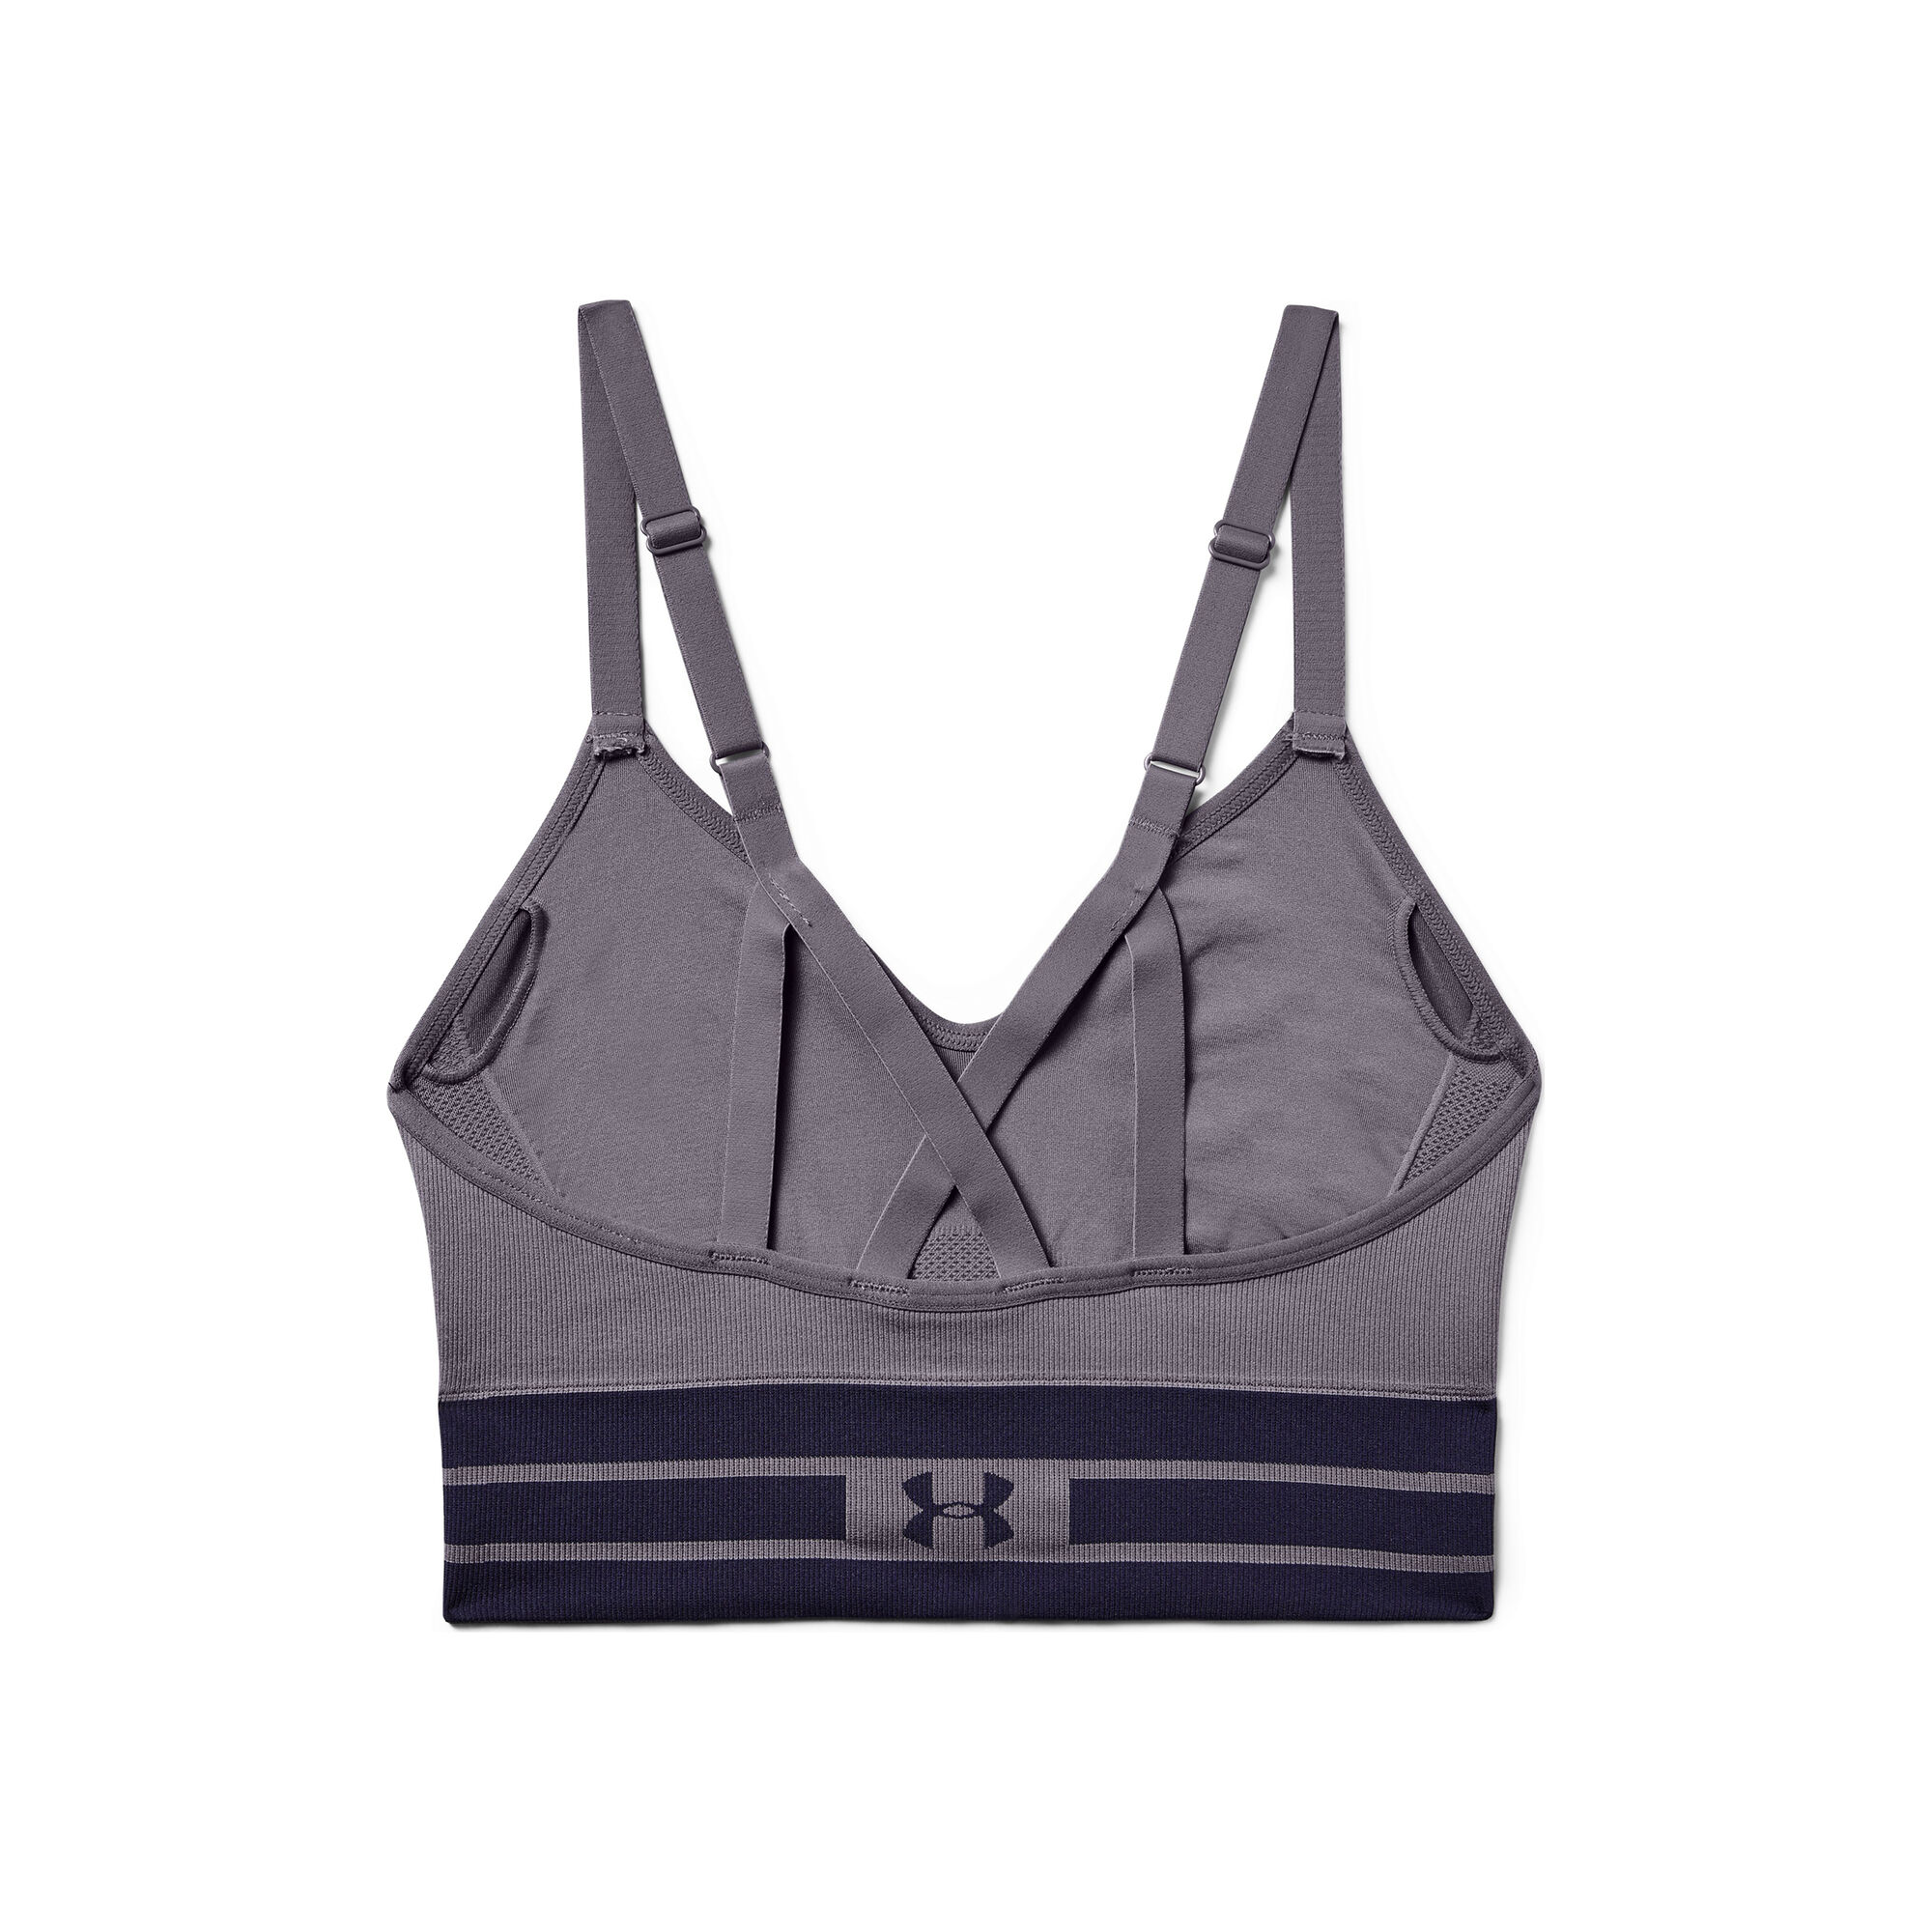 Buy Under Armour Seamless Longline Sports Bras Women Lilac, Grey online